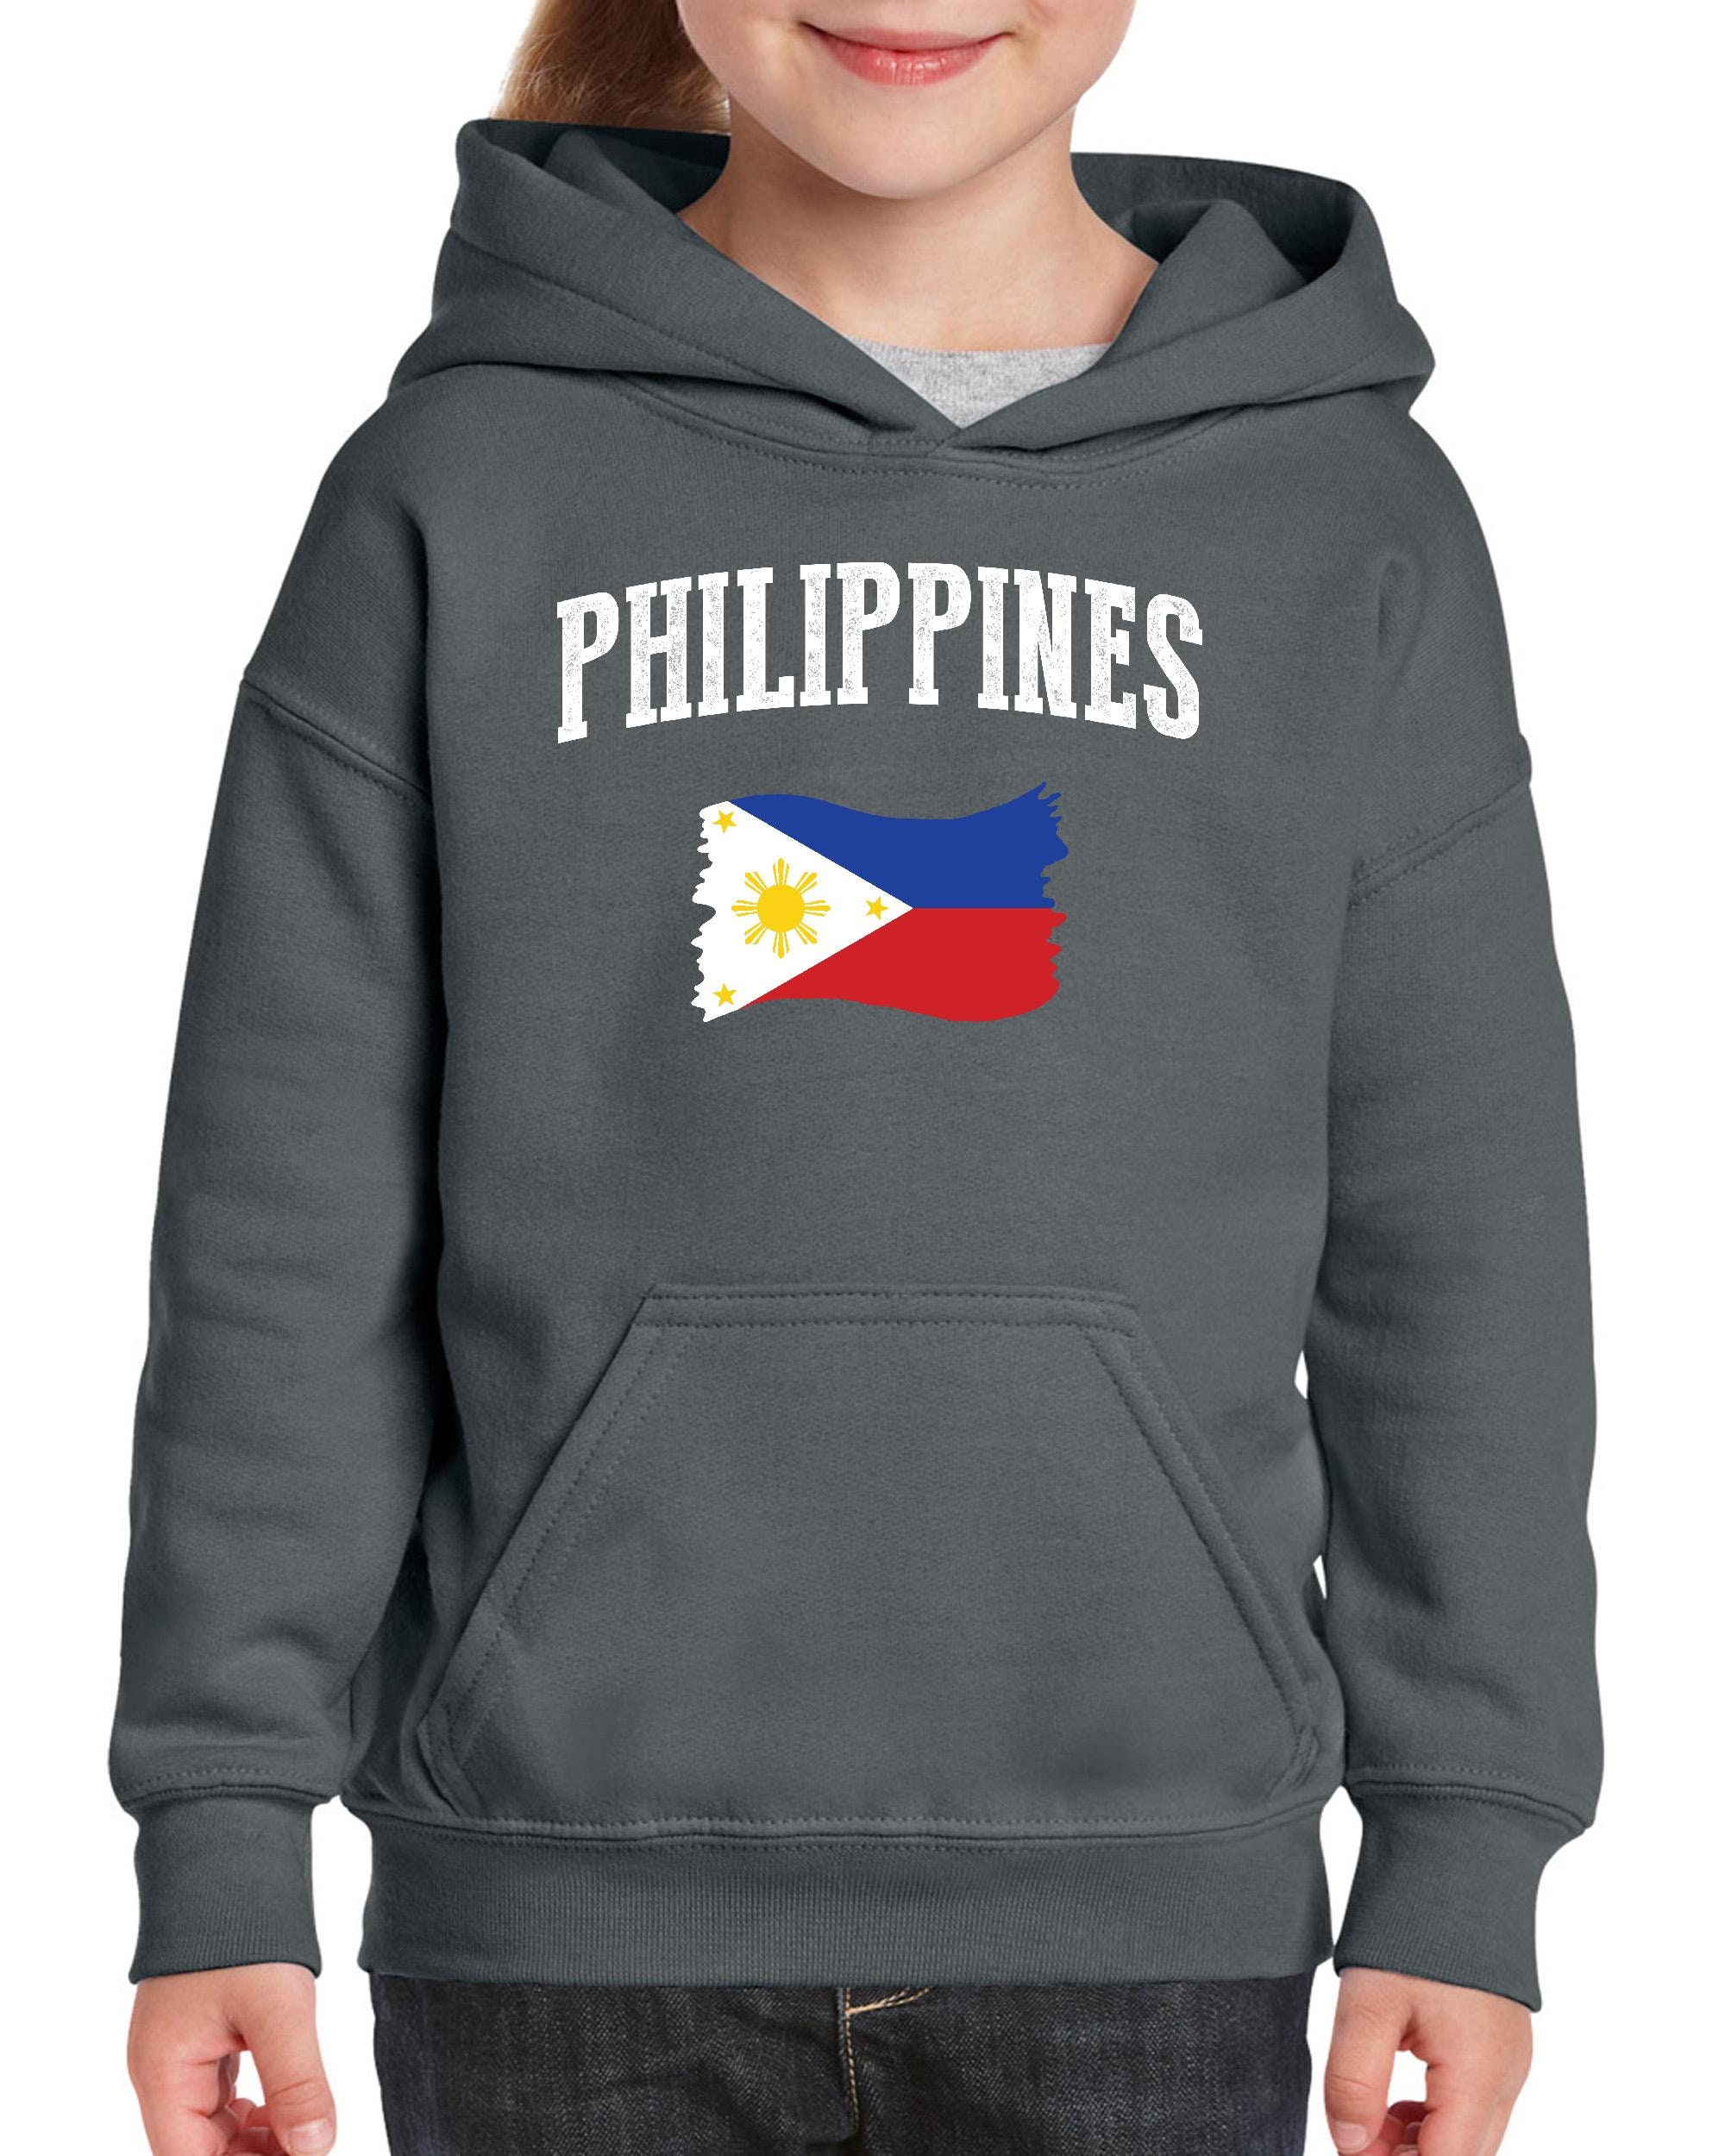 Philippines Youth Hoodie Hooded Sweatshirt | Etsy